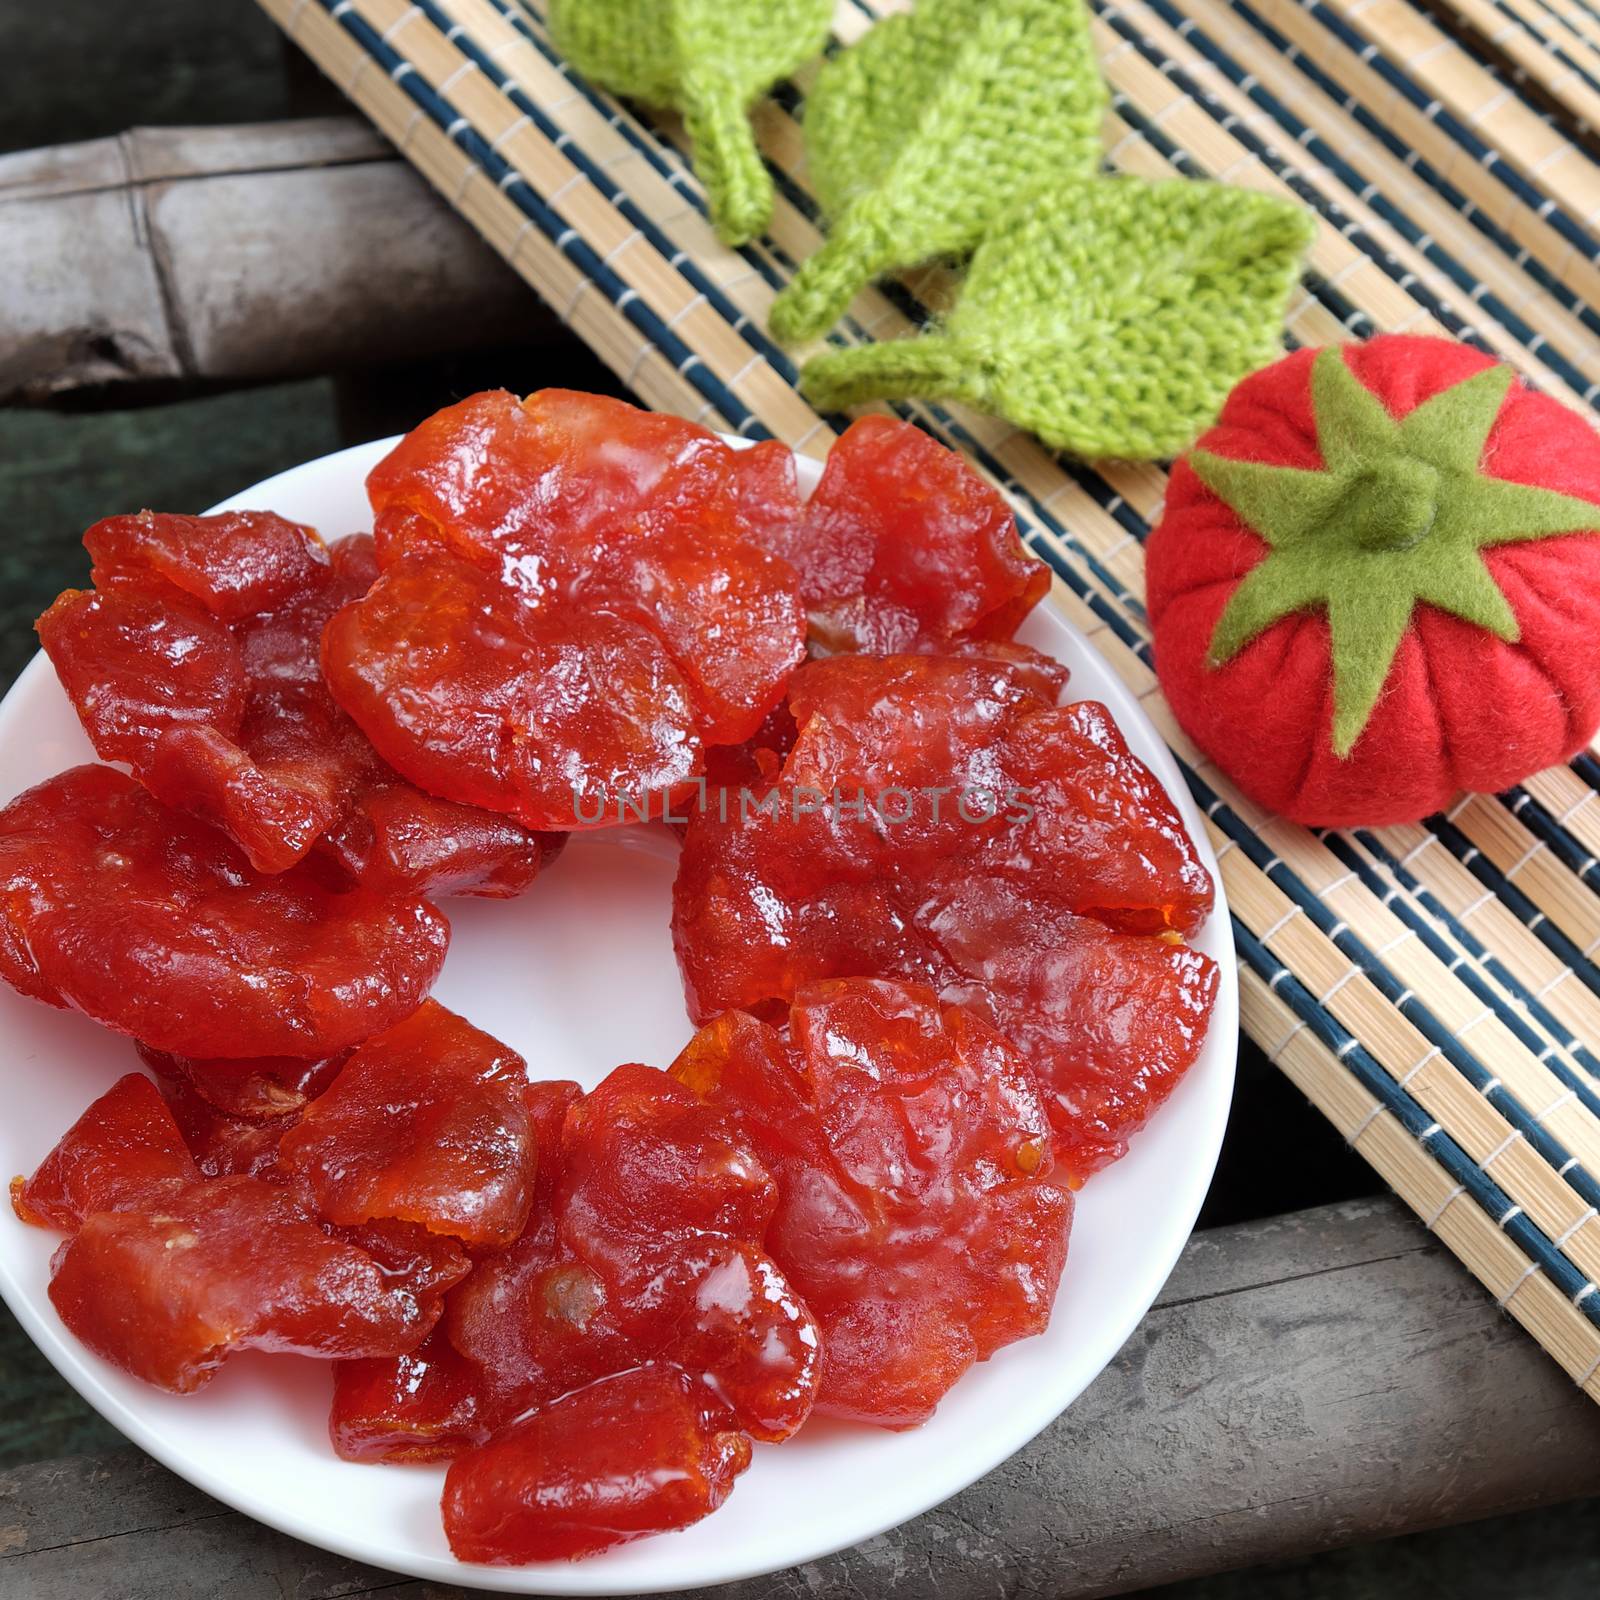 Vietnamese food,Tet, tomato jam, Vietnam traditional by xuanhuongho